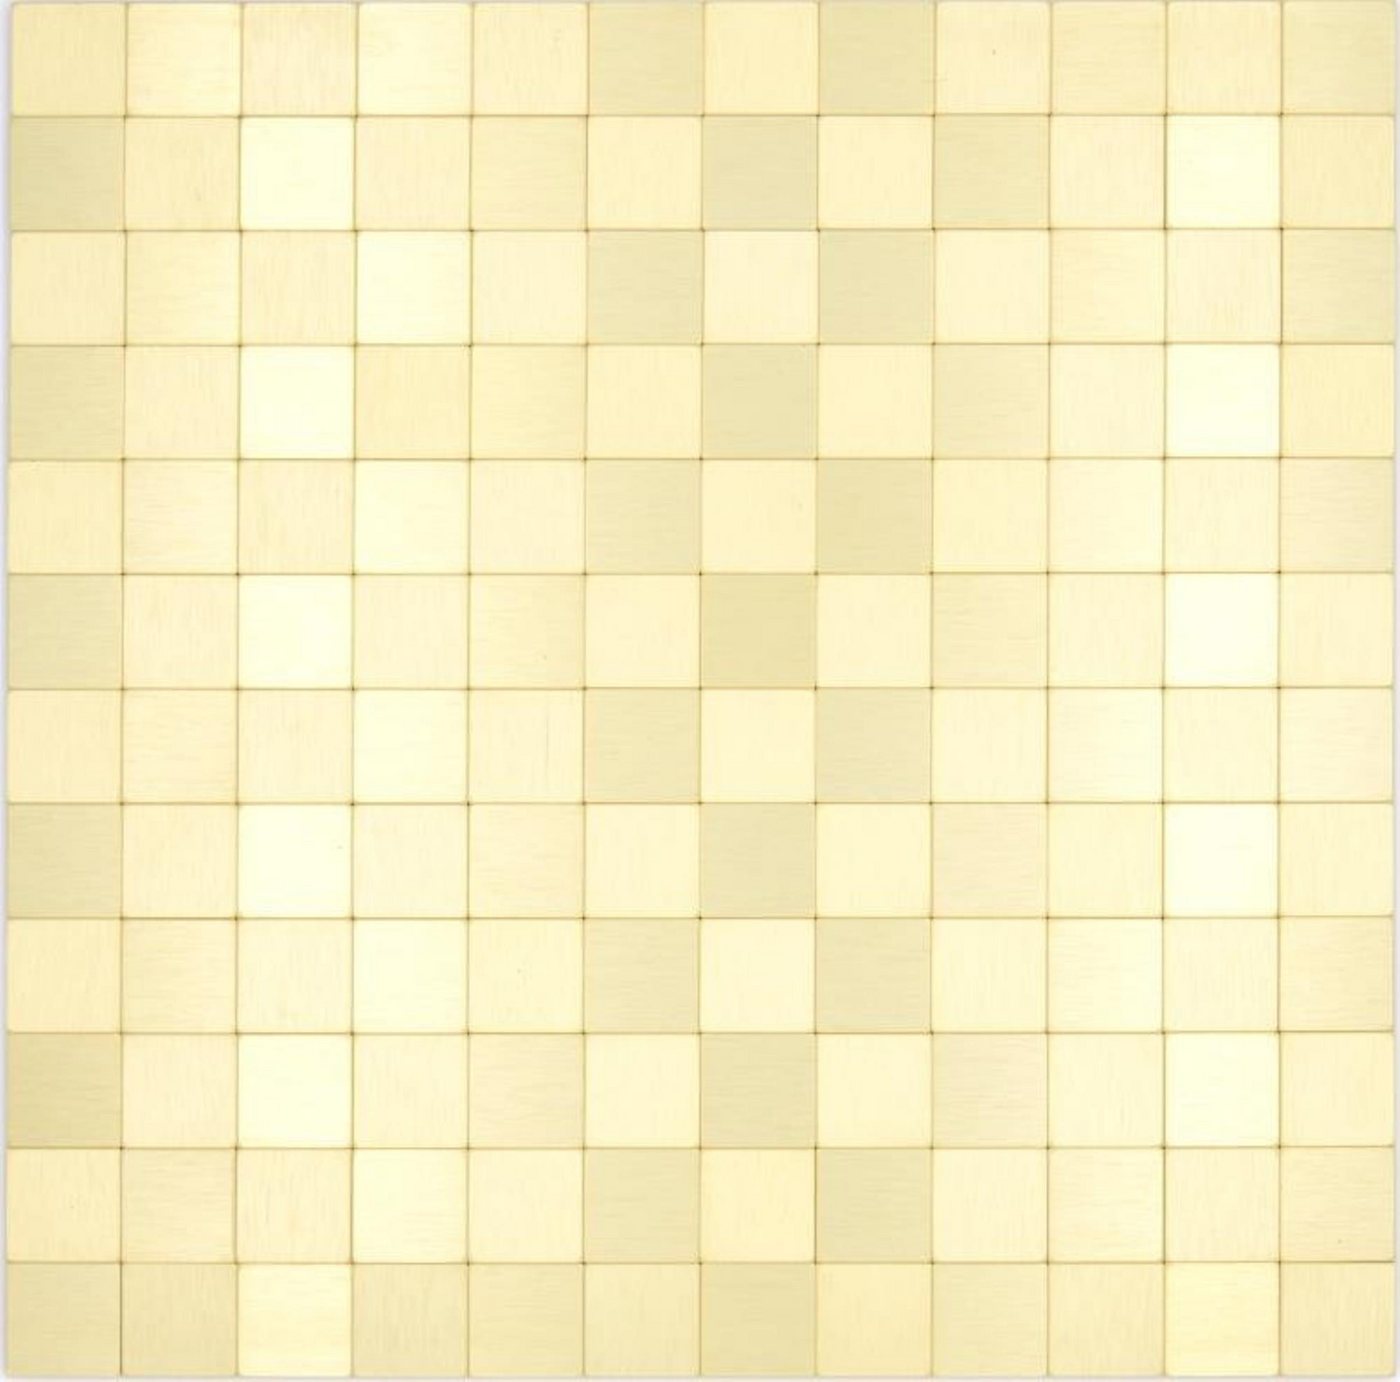 Mosani Aluminium Metall Mosaikfliesen Selbstklebende Wandfliesen Fliesenspiegel Wanddeko, 30.5x30.5, Gold, Spritzwasserbereich geeignet, Küchenrückwand Spritzschutz von Mosani